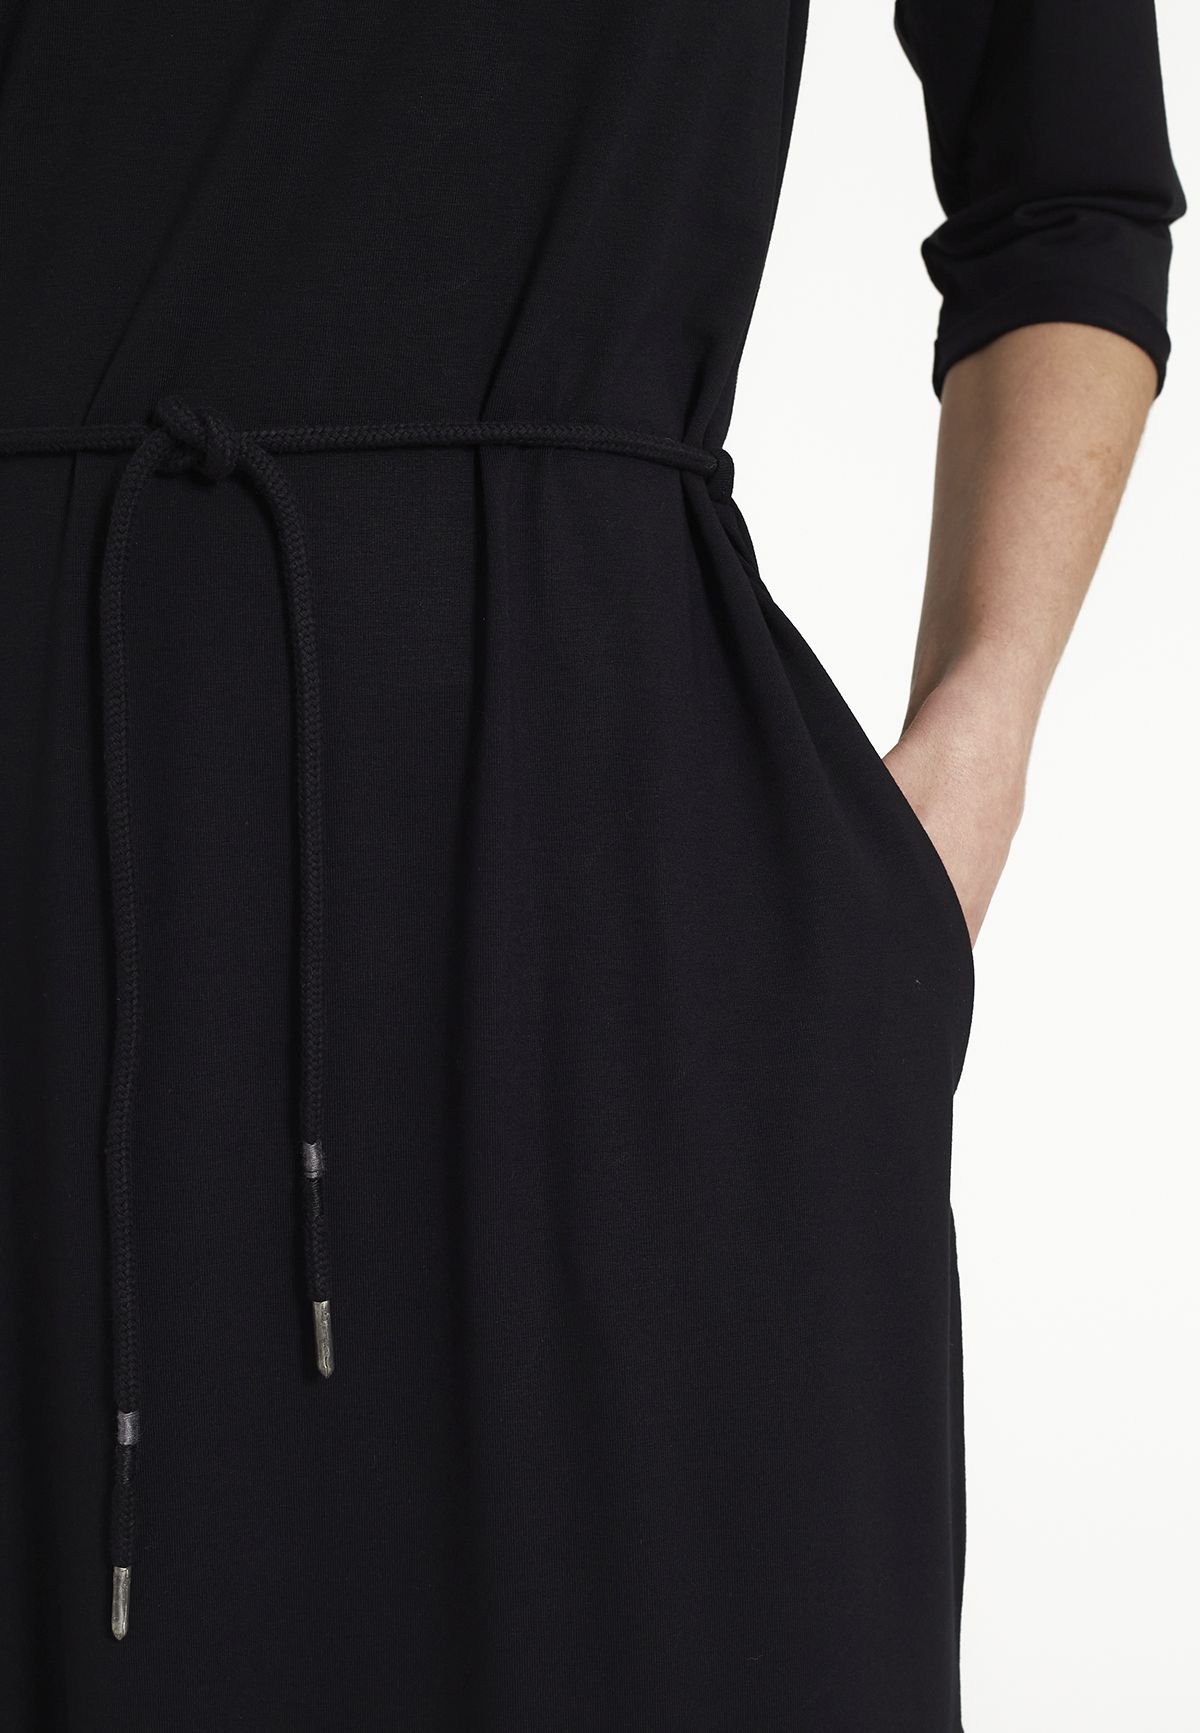 Damen-Kleid ARALIA black